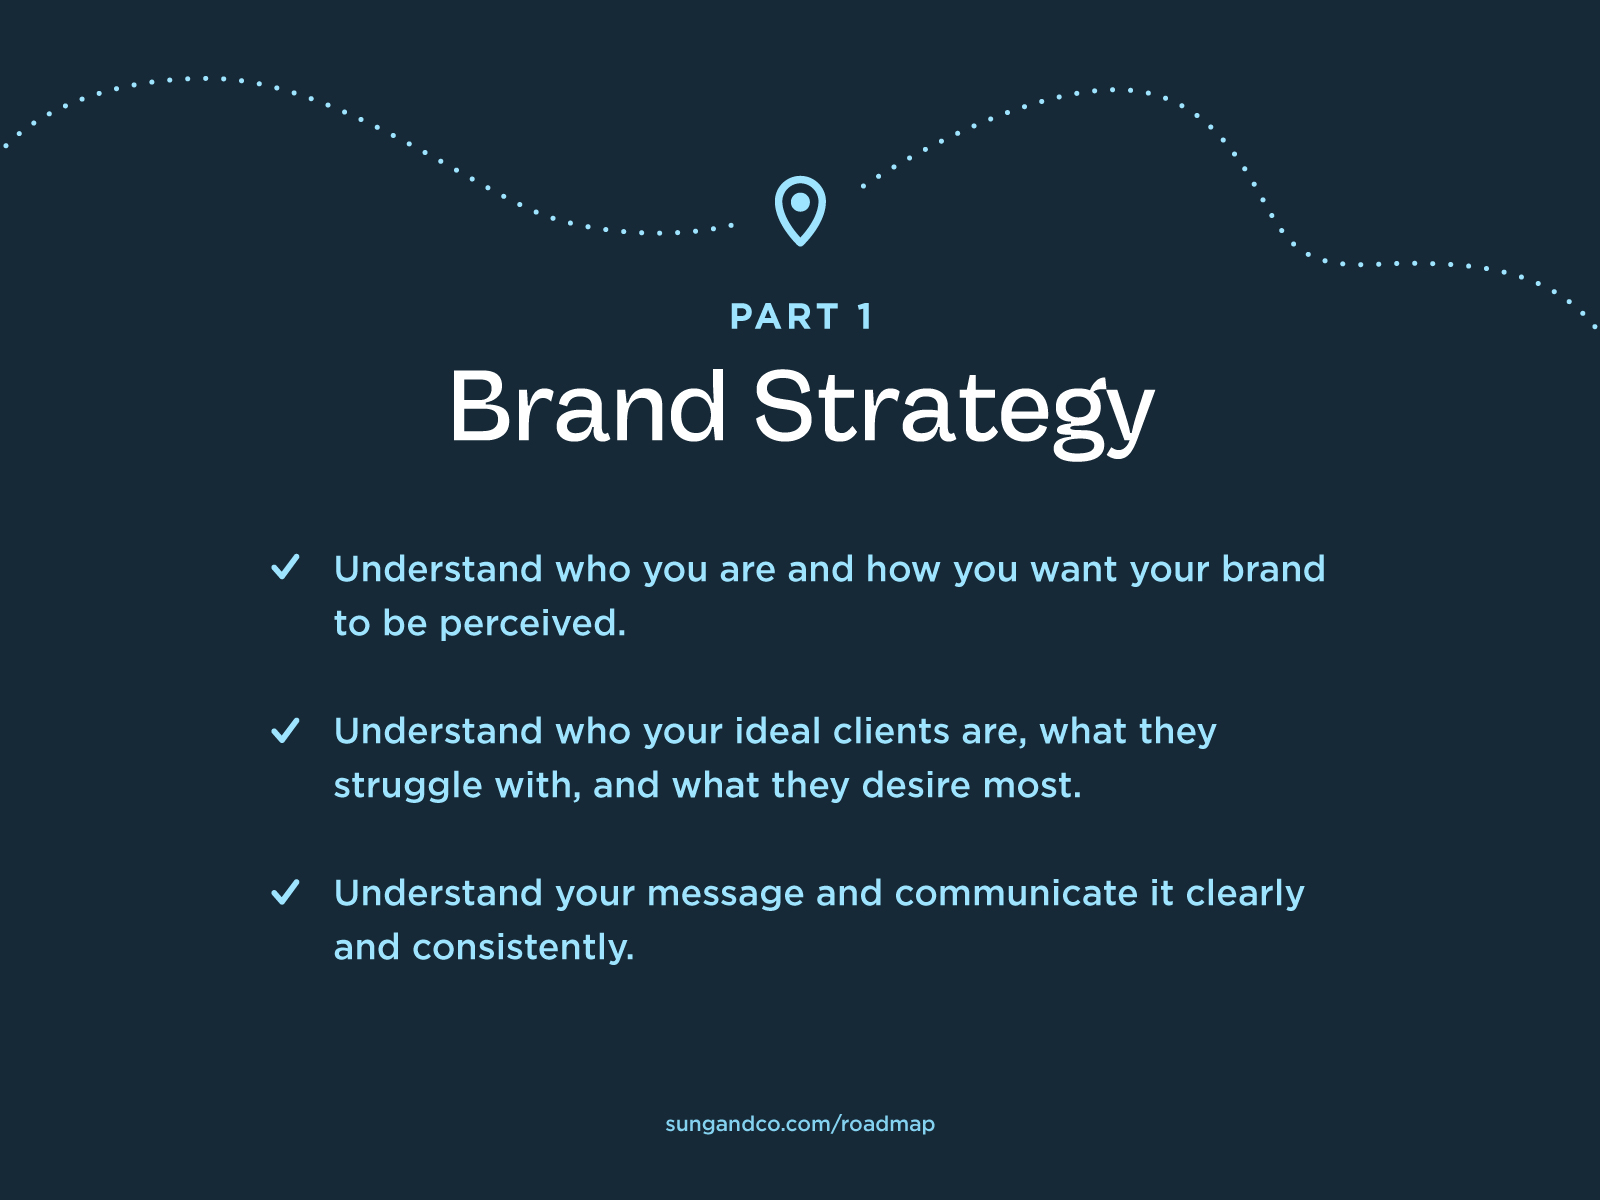 Part I: Brand Strategy